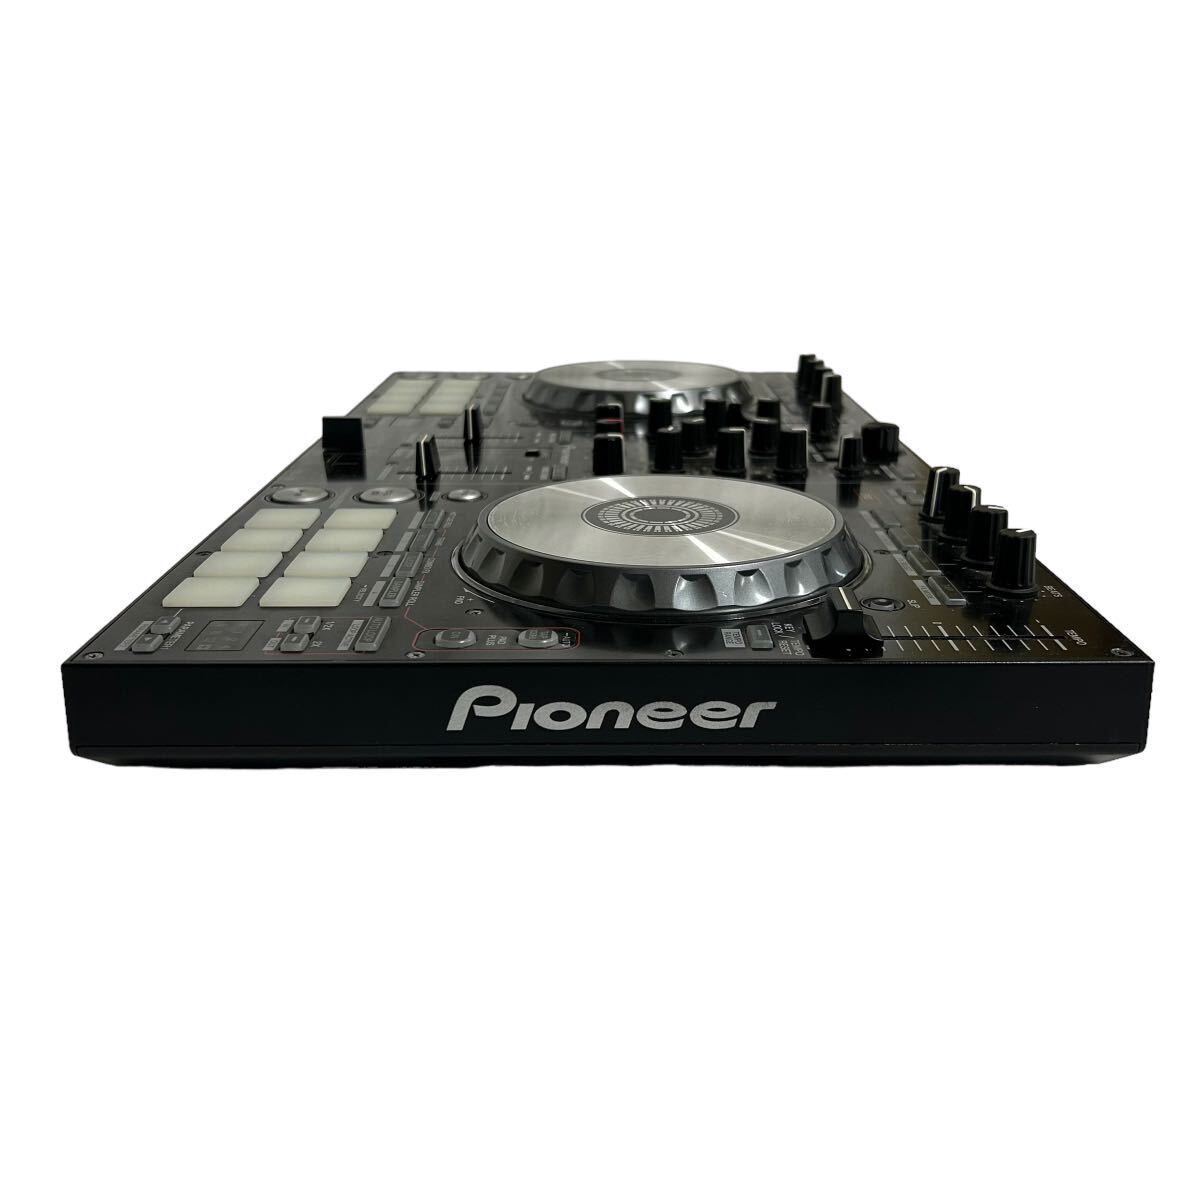 Pioneer DJ controller DDJ-SR Pioneer adaptor attaching case attaching Performance deck saver black DJ equipment 